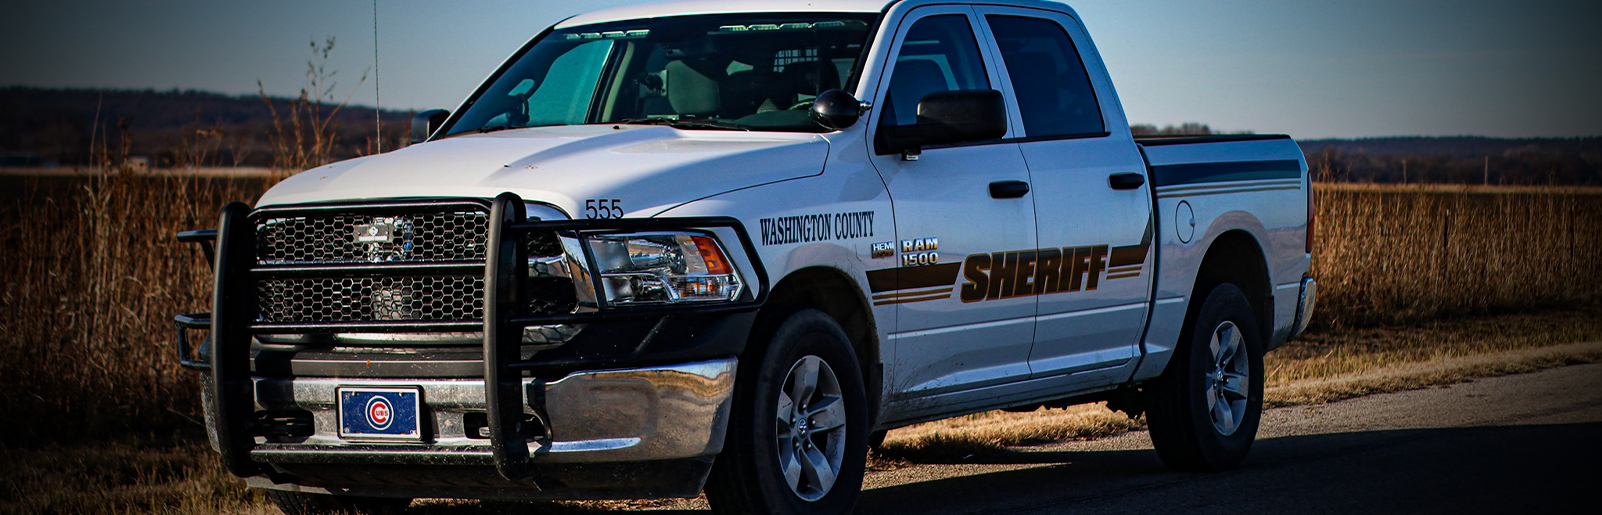 washington county sheriff oklahoma